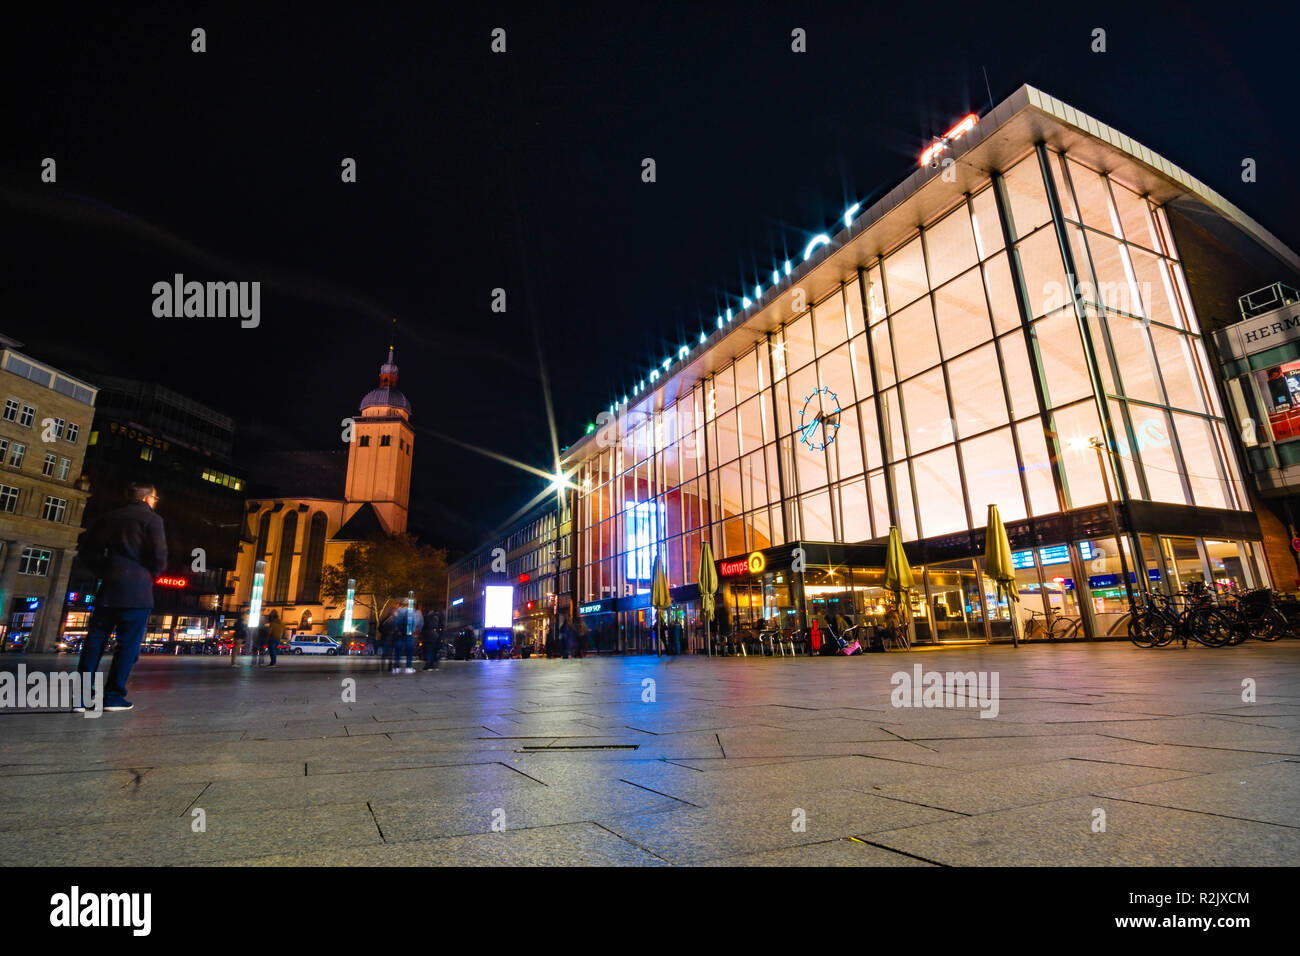 Kölner Hauptbahnhof bei Nacht - Cologne Main Station at Night Stock Photo